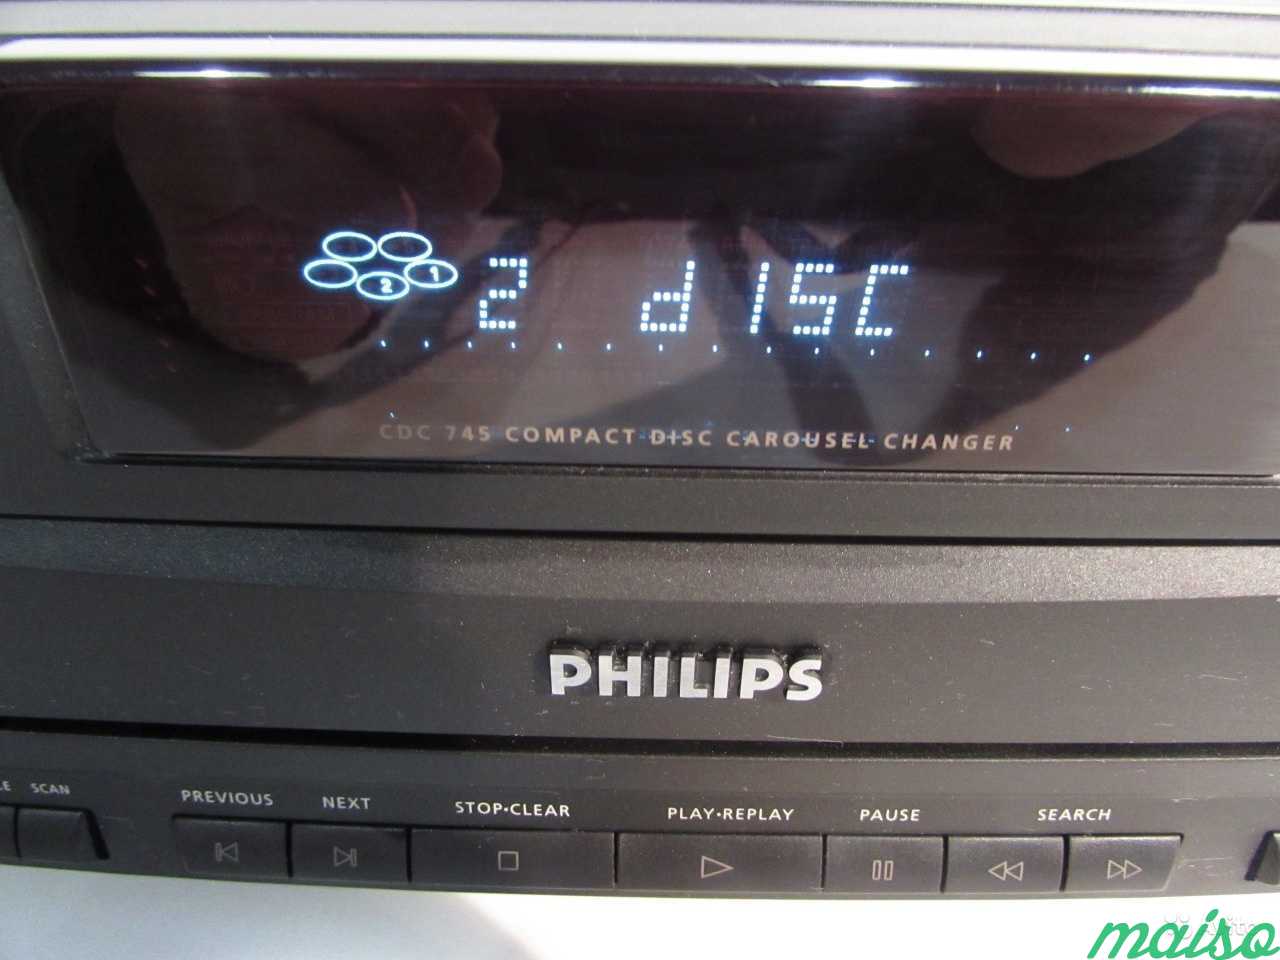 Philips CDC745 CD-Плеер на 5 дисков в Санкт-Петербурге. Фото 2